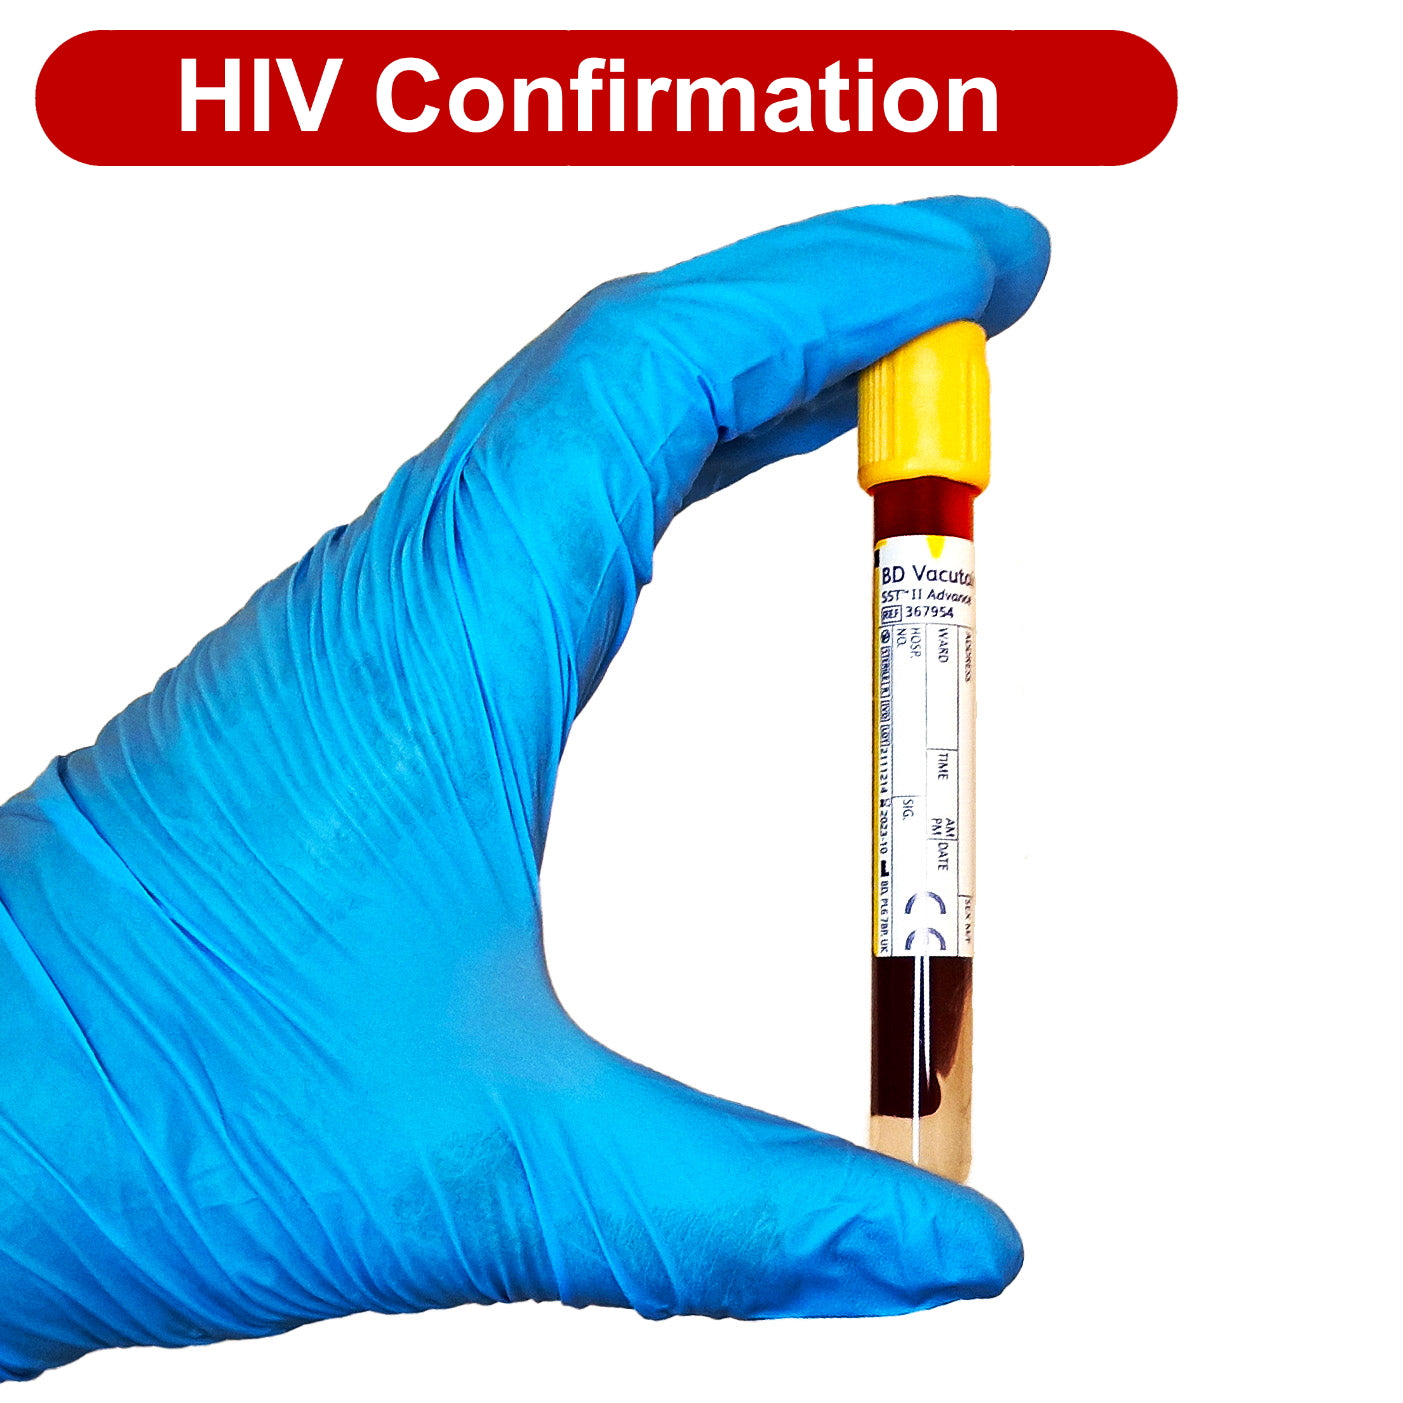 HIV Confirmation Blood Test